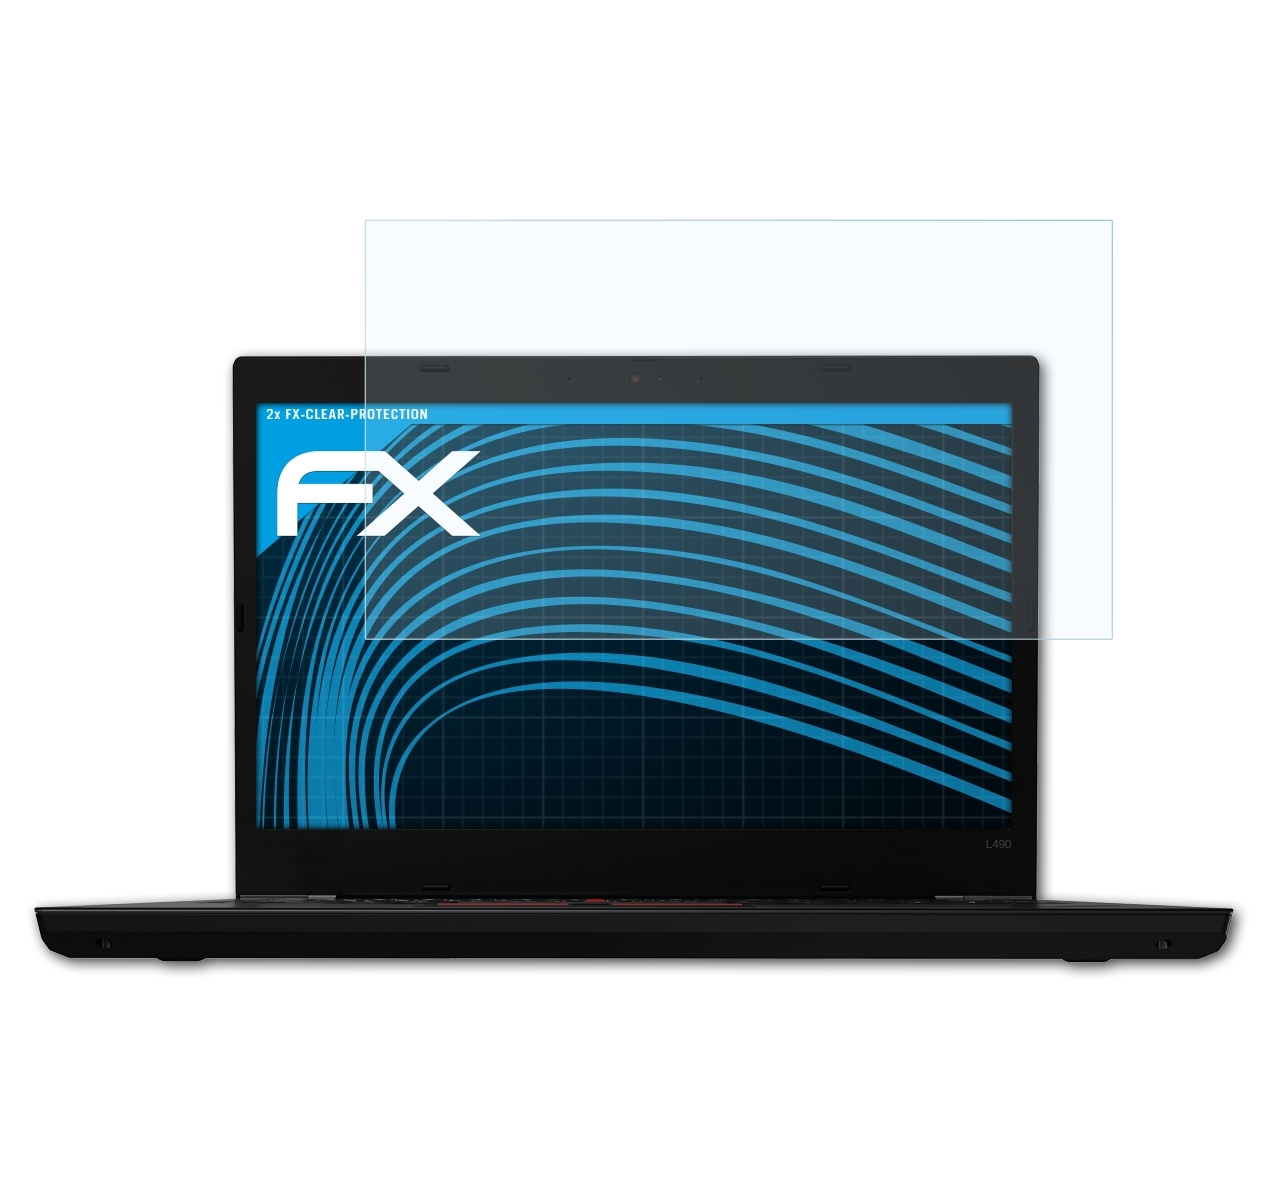 ATFOLIX 2x Displayschutz(für ThinkPad L490) FX-Clear Lenovo